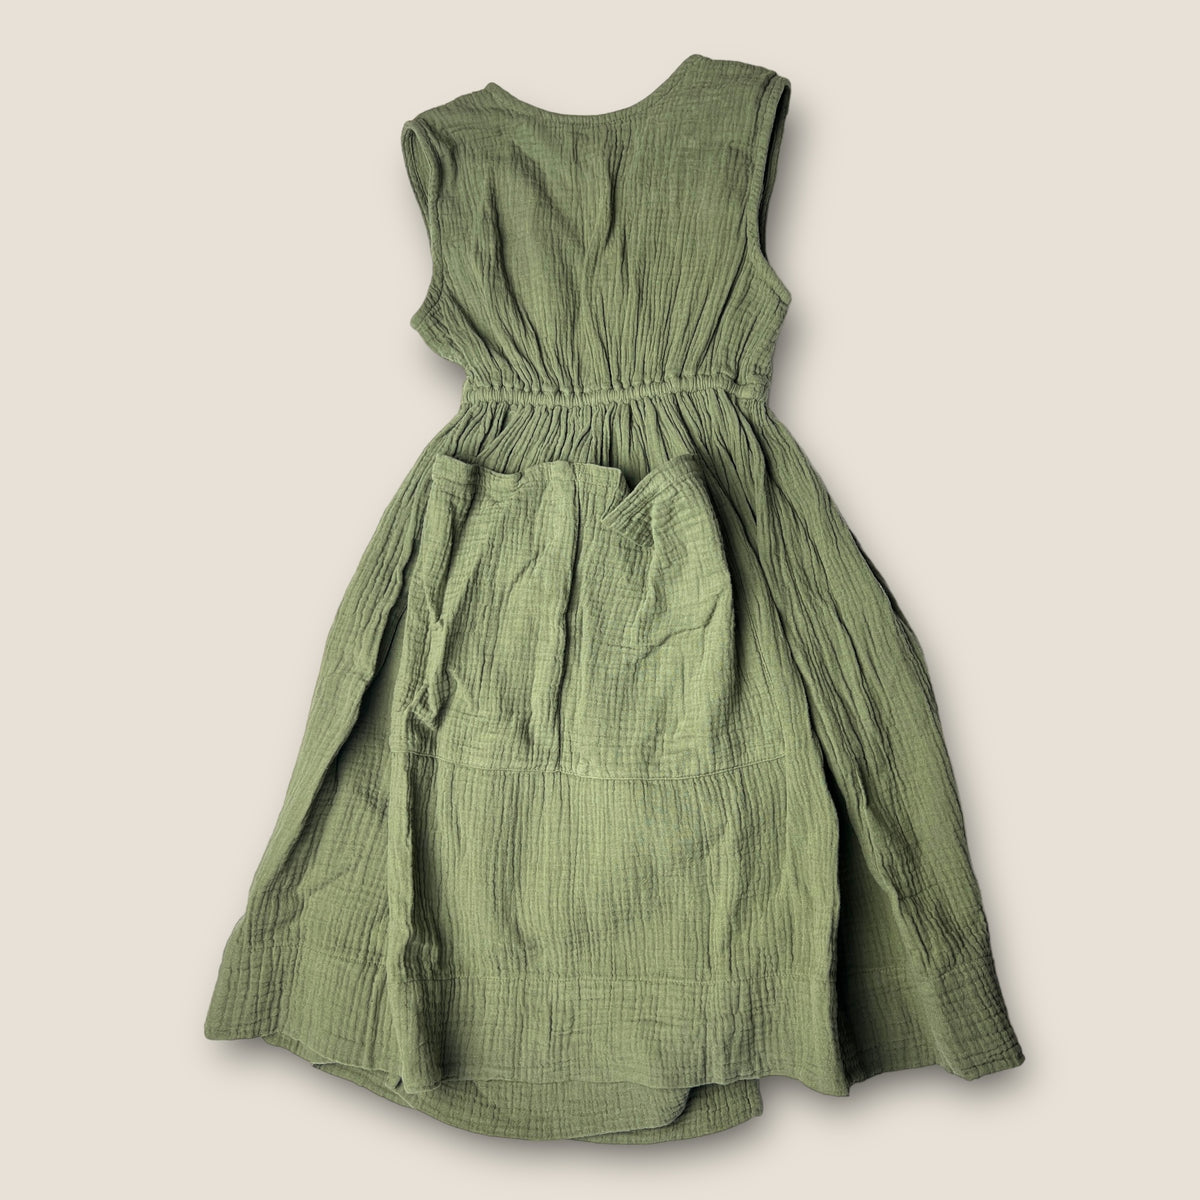 Soor Plume Dress size 6 years